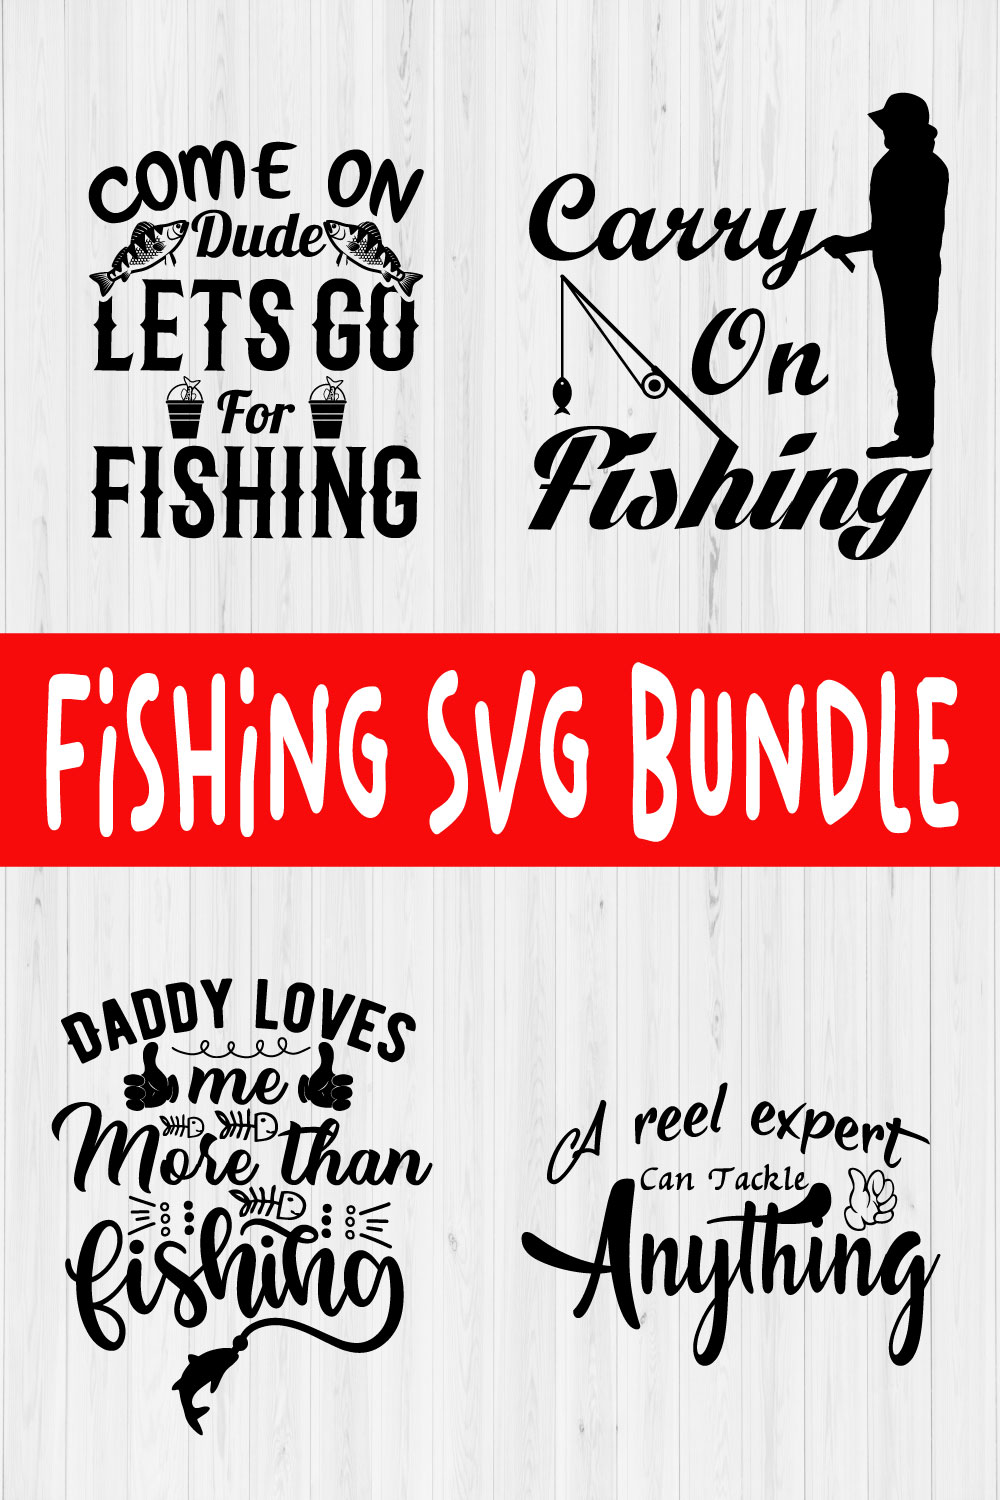 Fishing Svg Bundle Vol2 pinterest preview image.